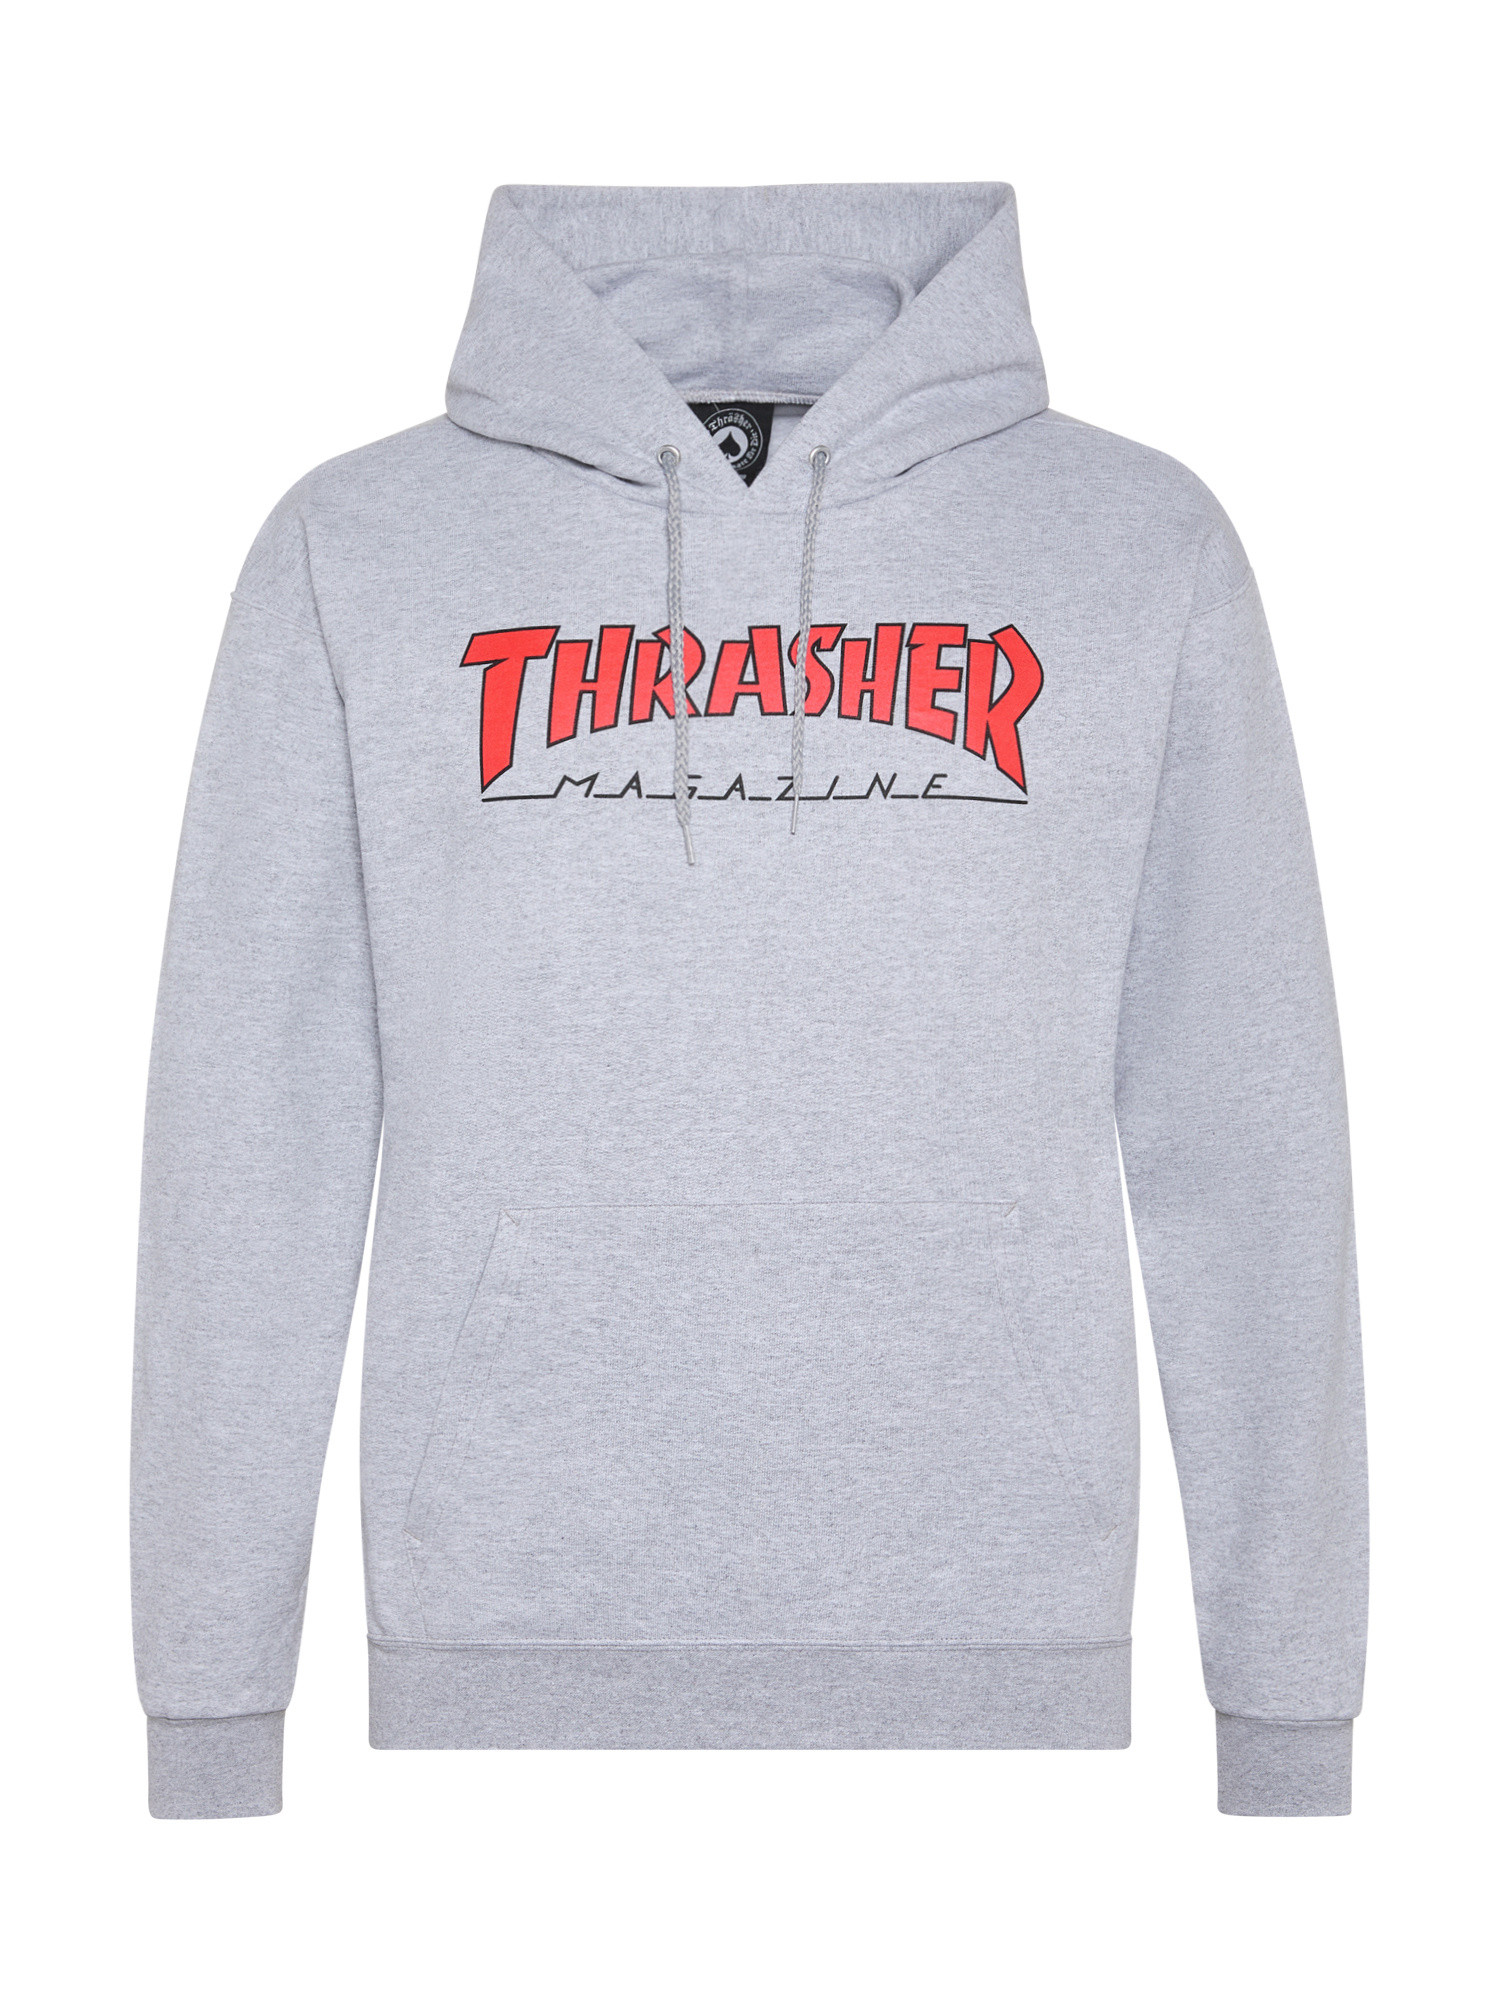 Thrasher - Outlined logo hoodie, Grey, large image number 0